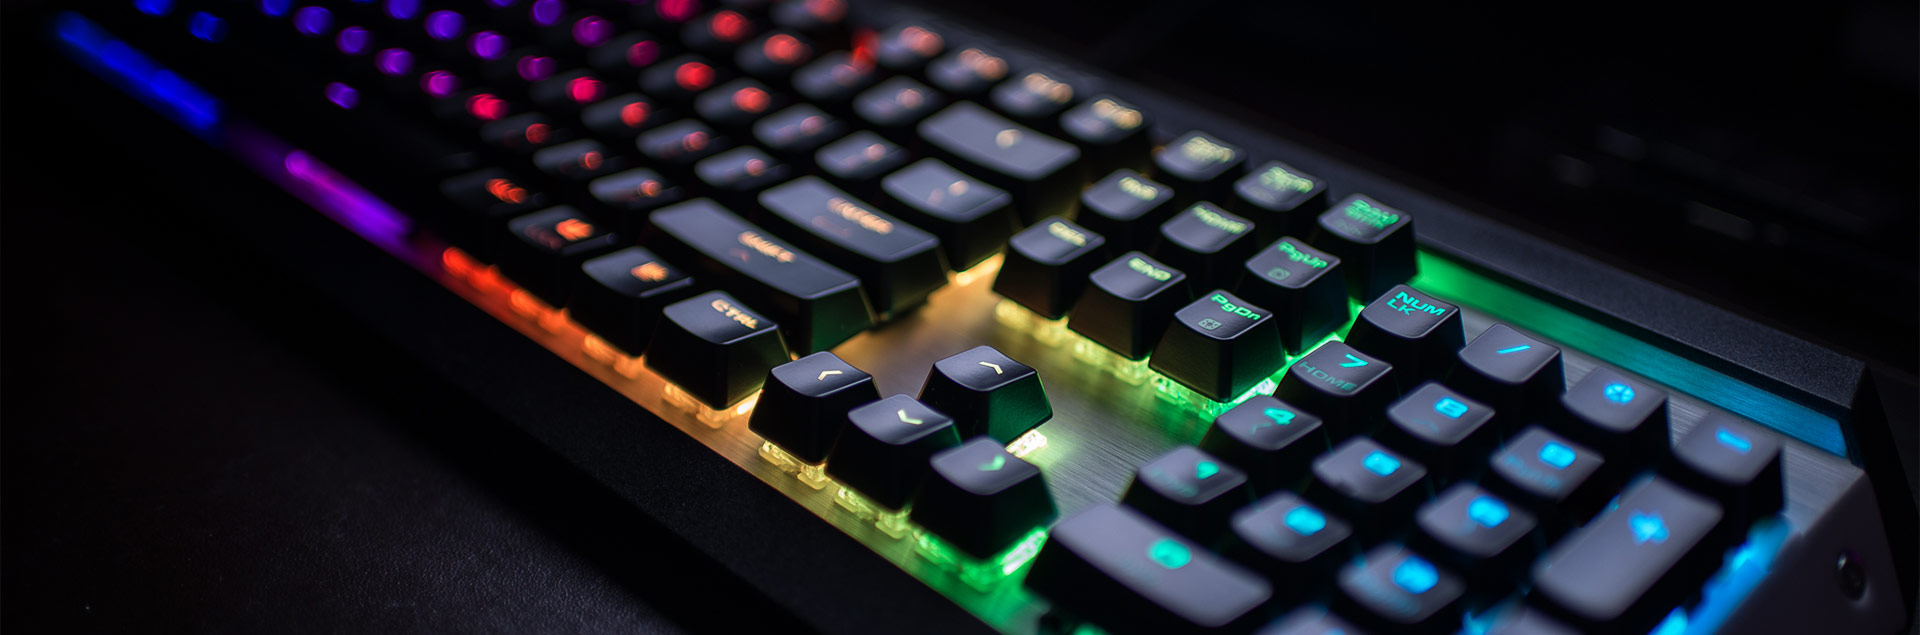 COUGAR ATTACK X3 RGB - Cherry MX RGB Mechanical Gaming Keyboard